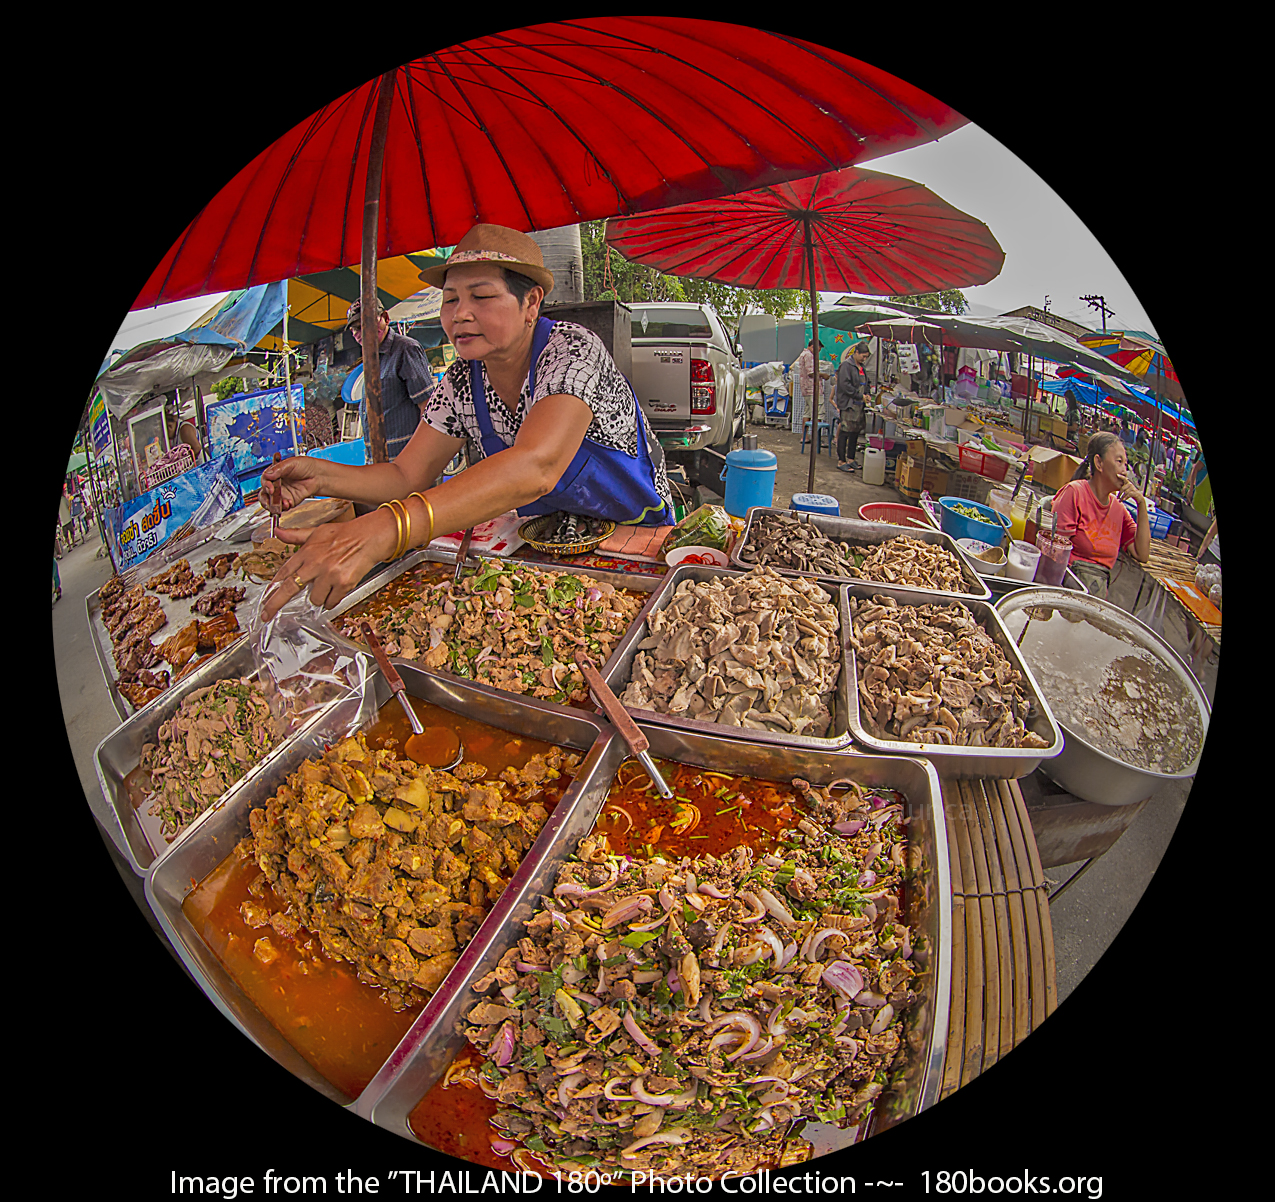 Image of Isaan food vendor